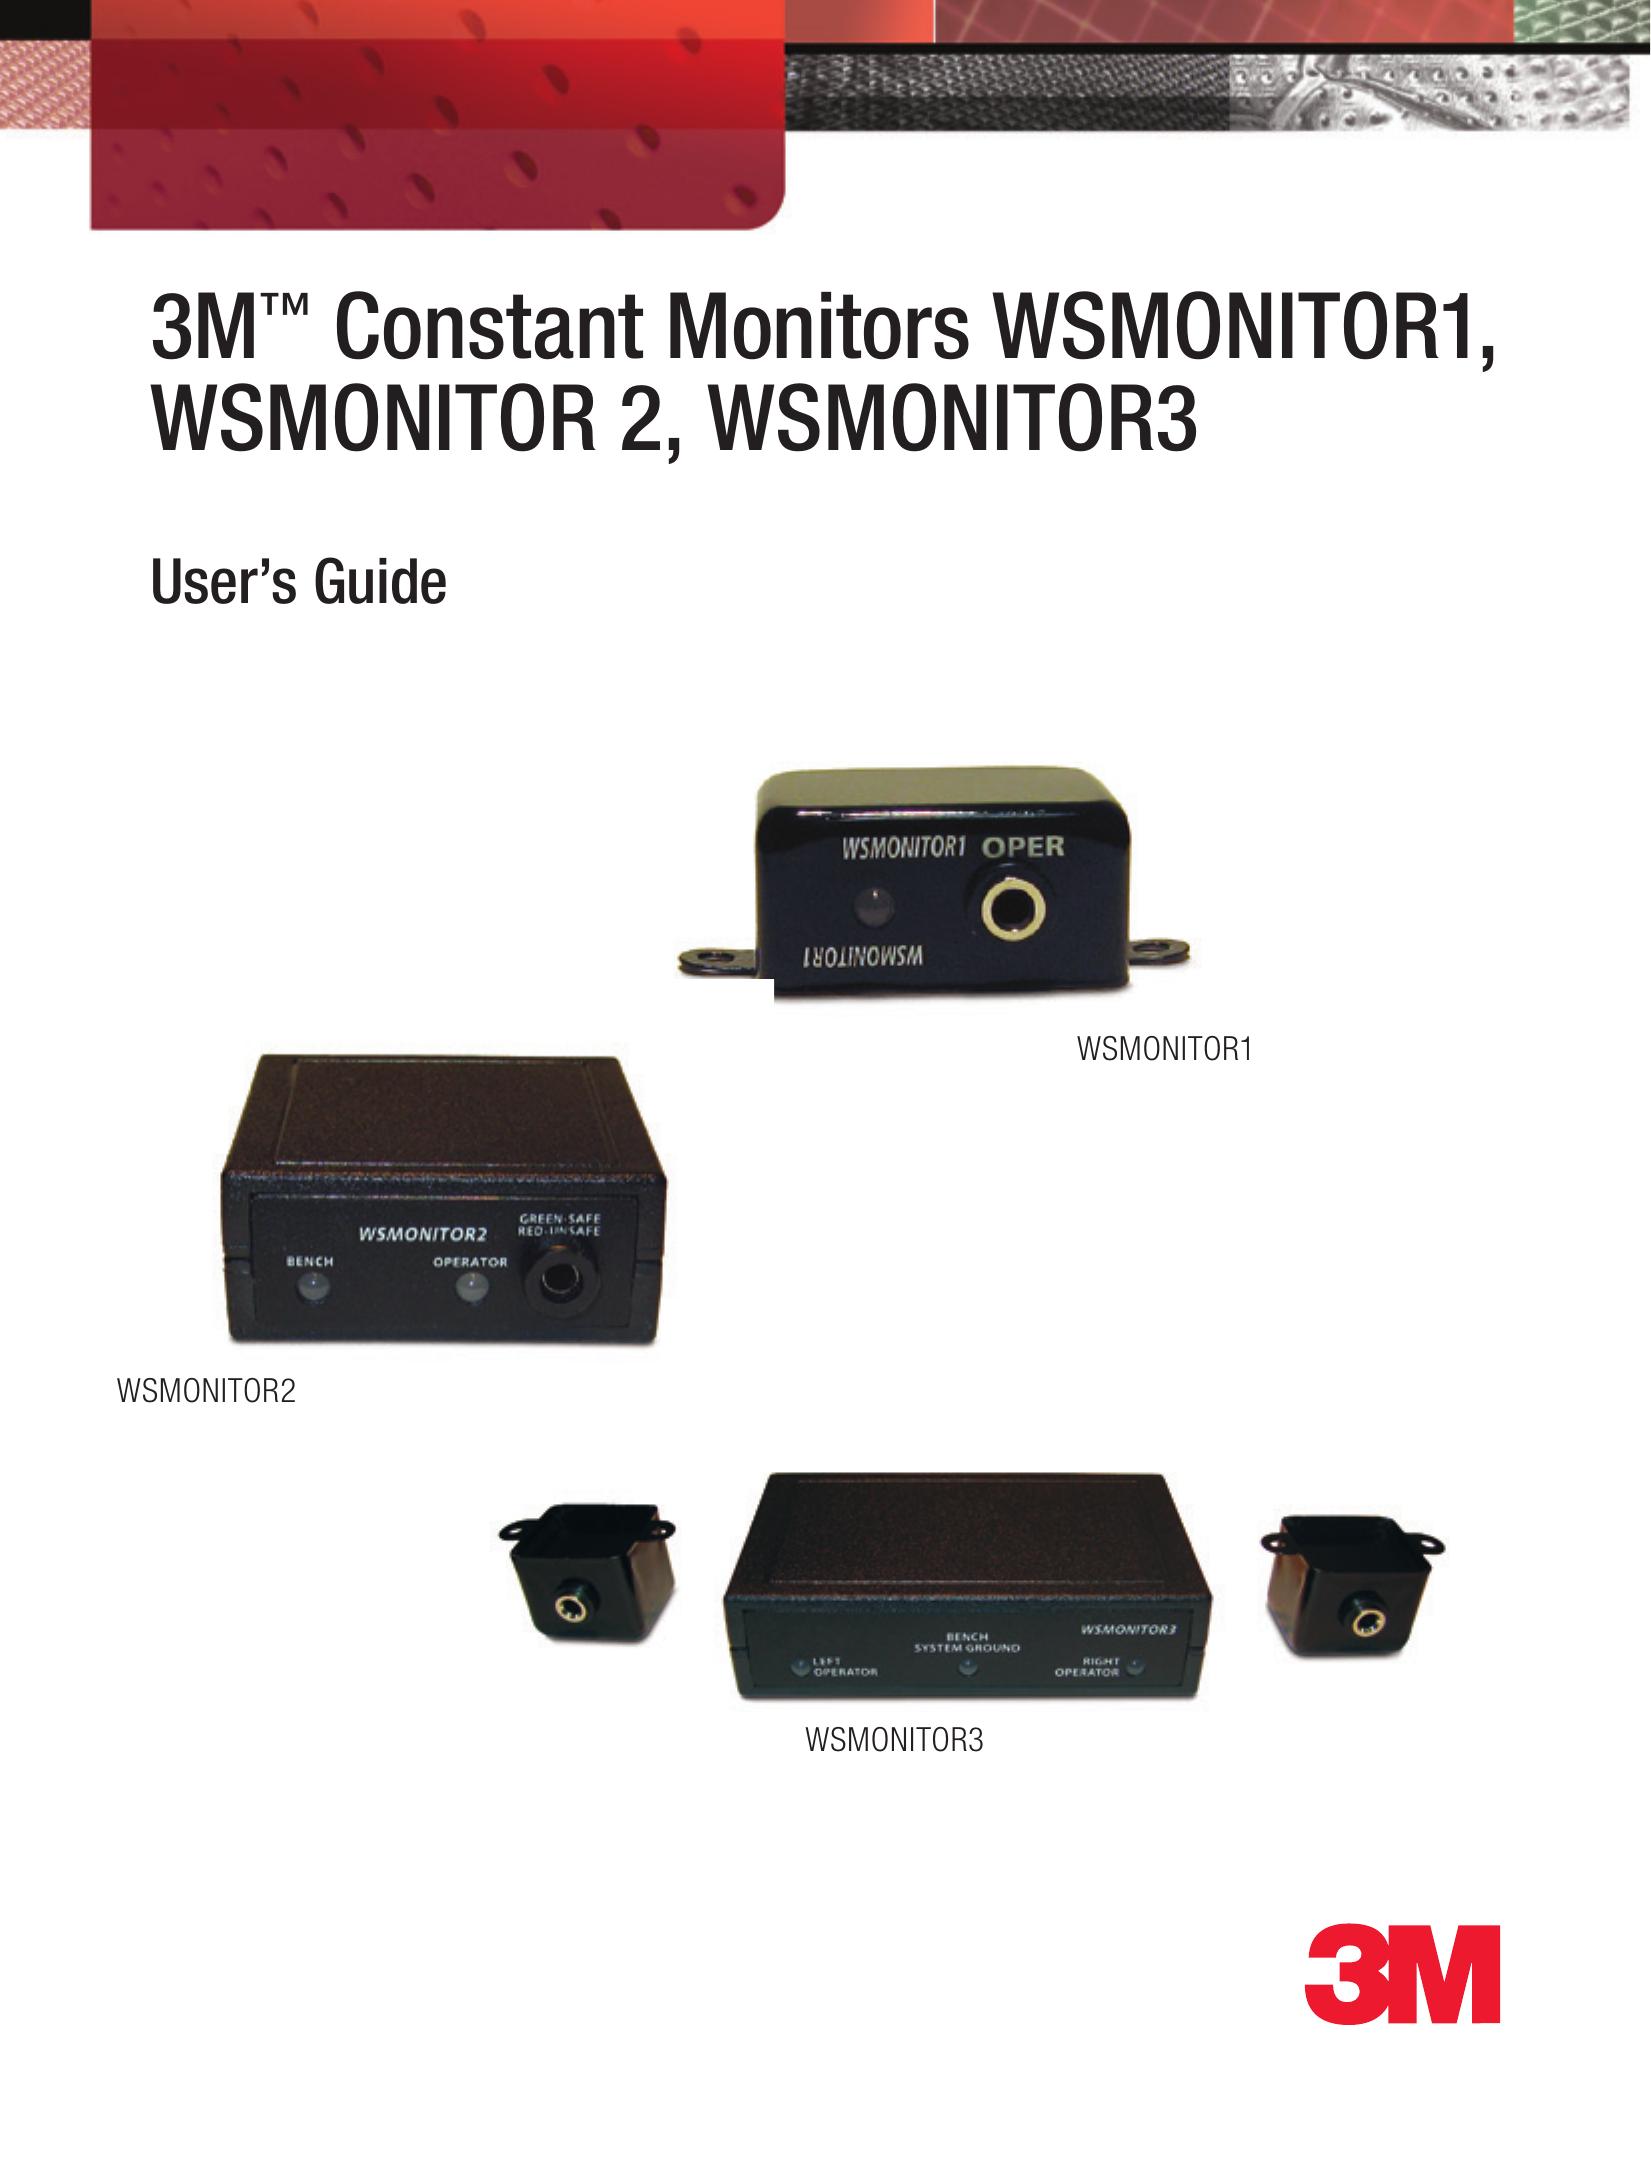 3M WSMONITOR3 Marine Instruments User Manual